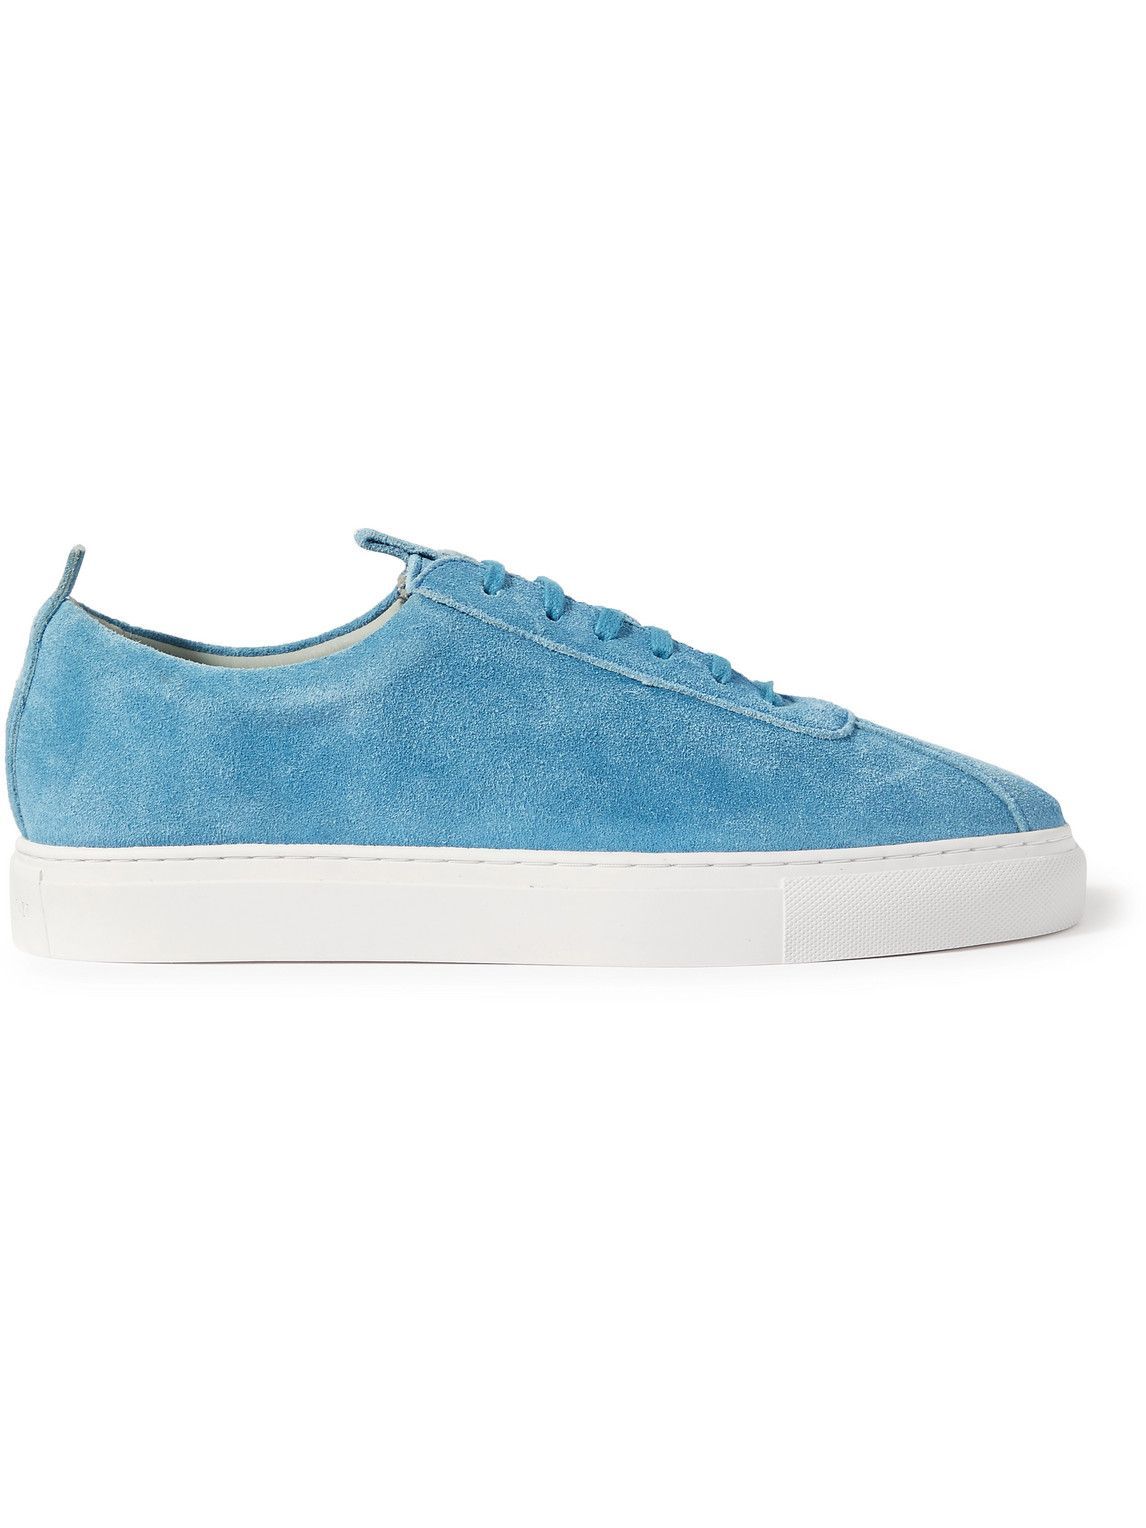 Grenson - Suede Sneakers - Blue Grenson